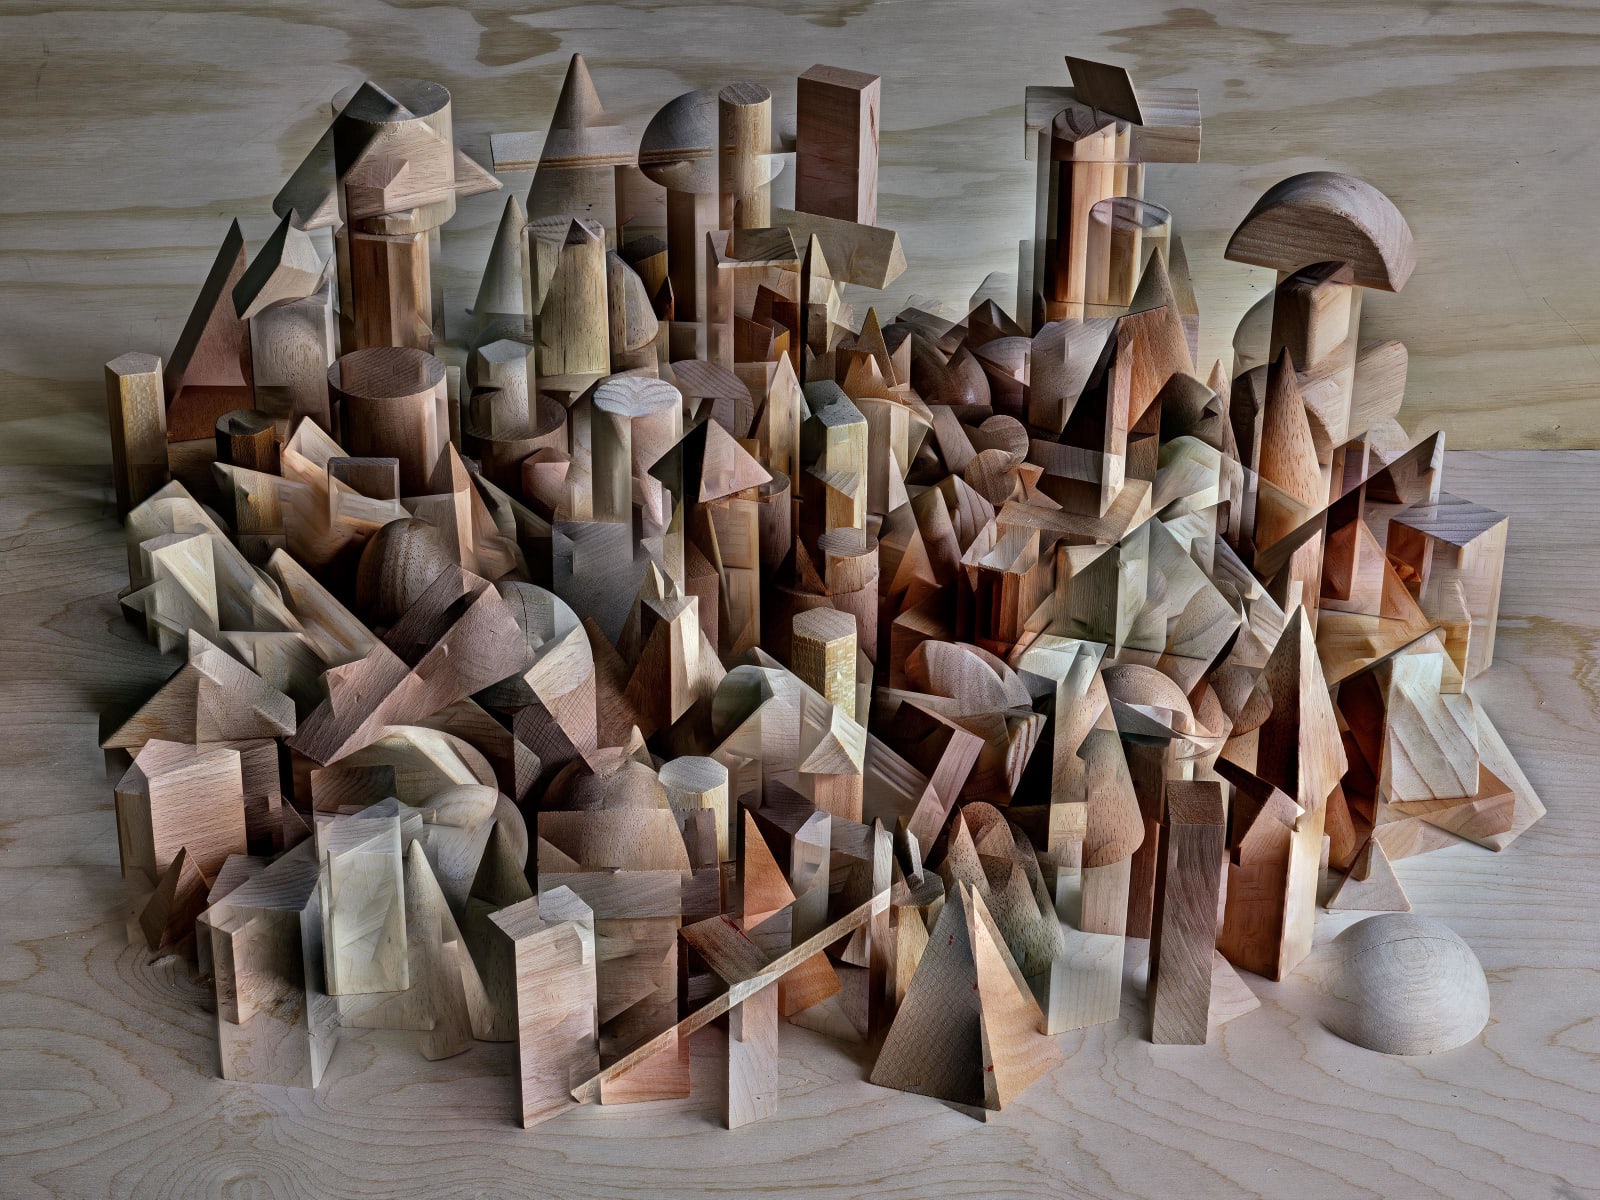 Abelardo Morell, Wood Block Construction #1, for Steve Reich, 2021